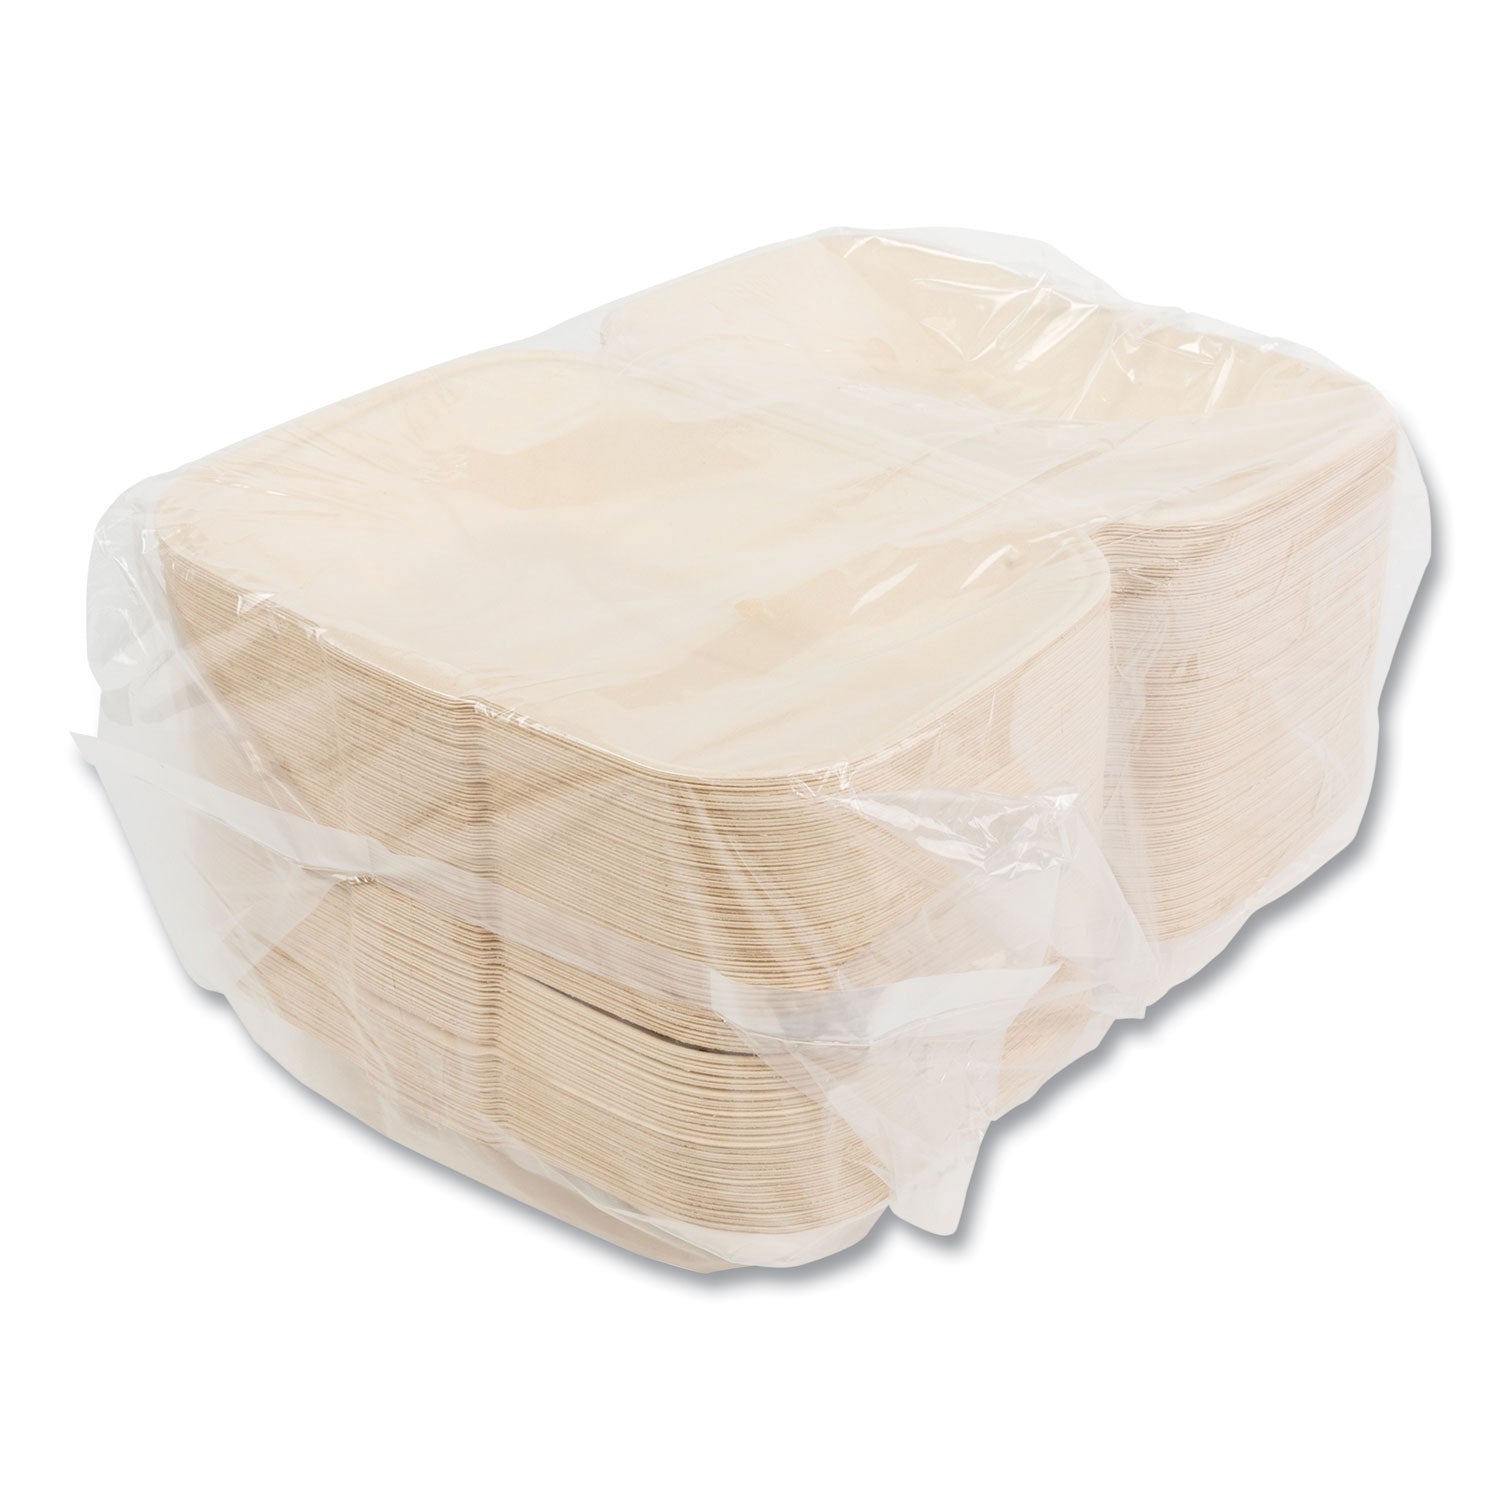 bagasse-pfas-free-food-containers-hoagie-hinged-lid-1-compartment-6-x-3-x-9-tan-bamboo-sugarcane-250-carton_bwkhinge96npfa - 5